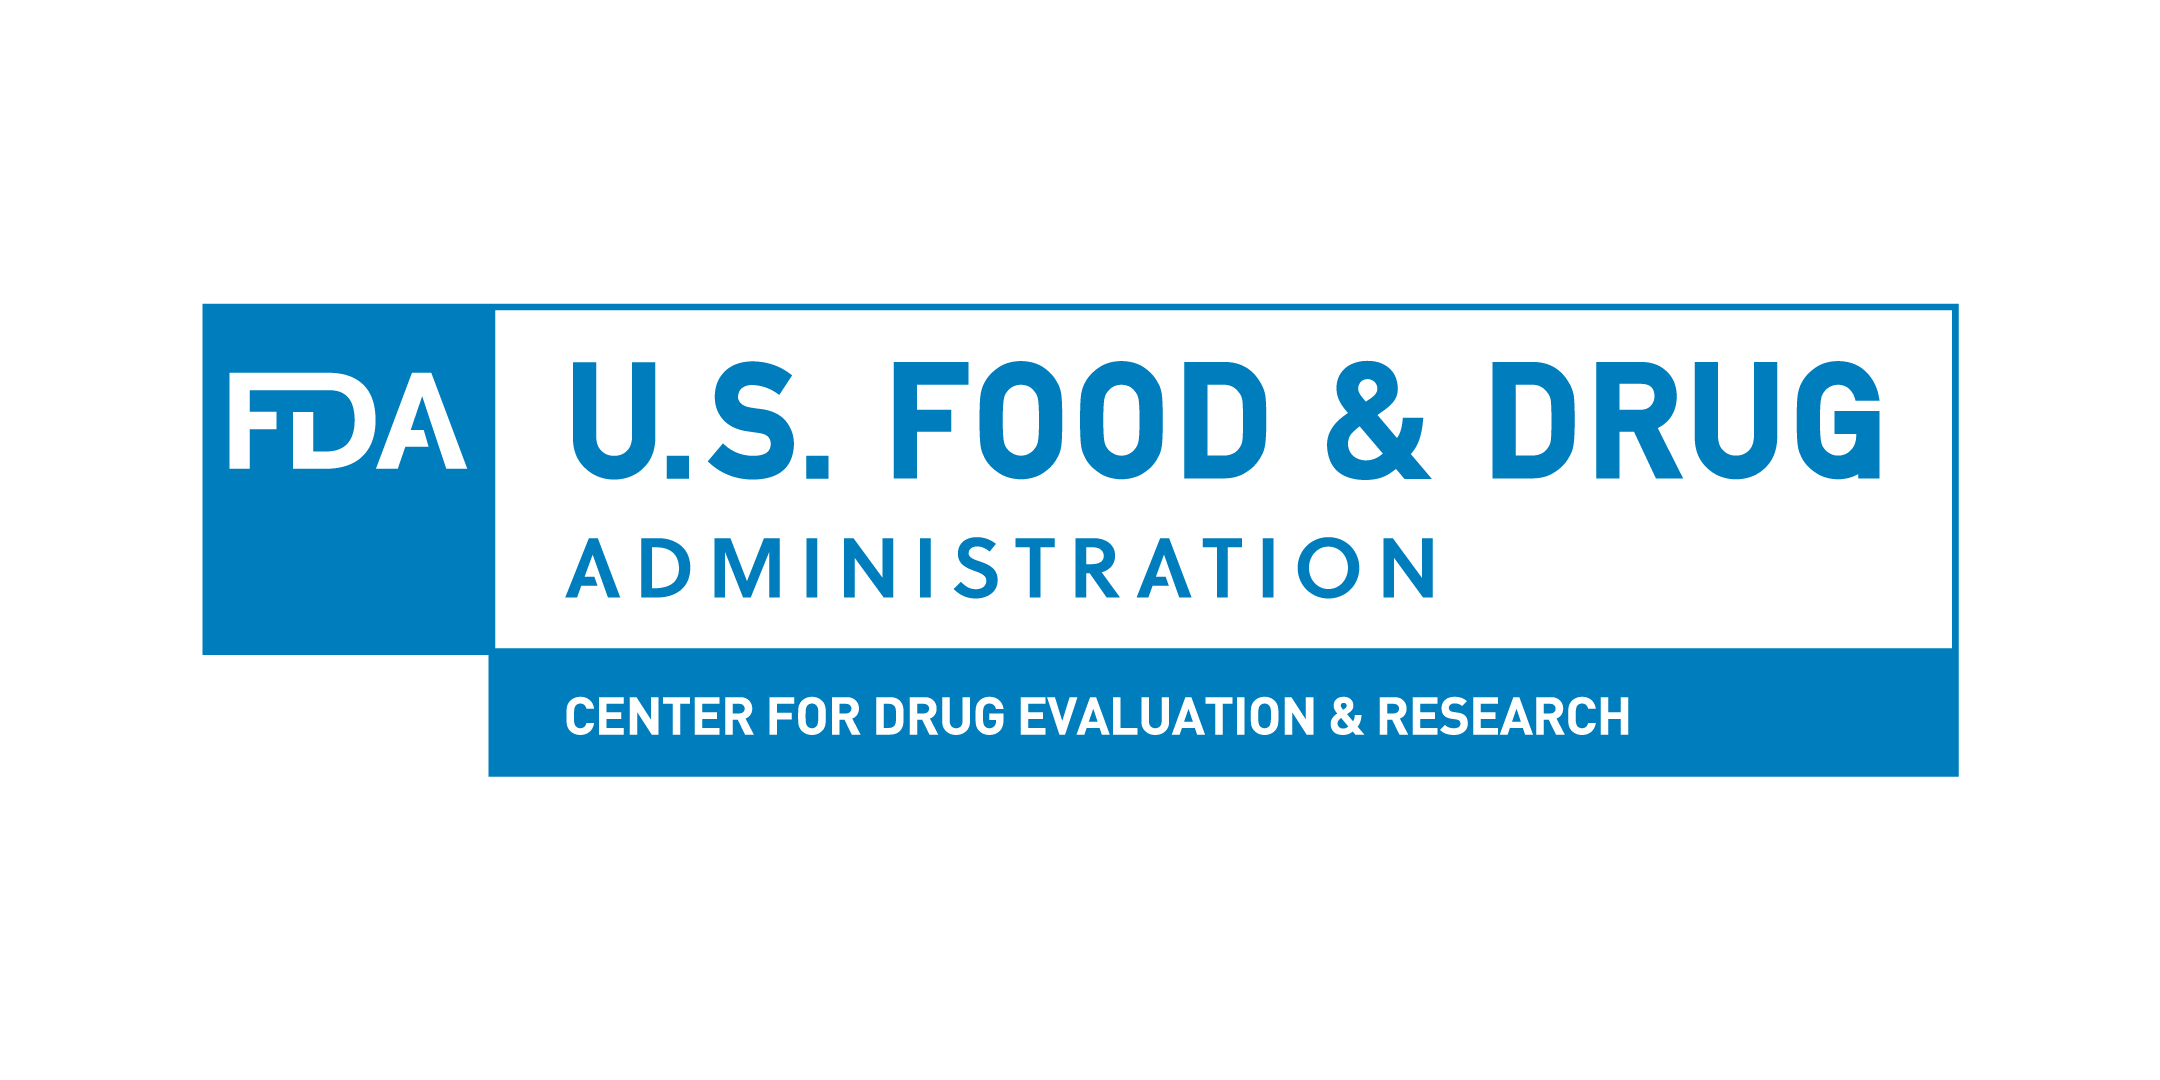 Cder Logo - Food and Drug Administration Center for Drug Evaluation and Research